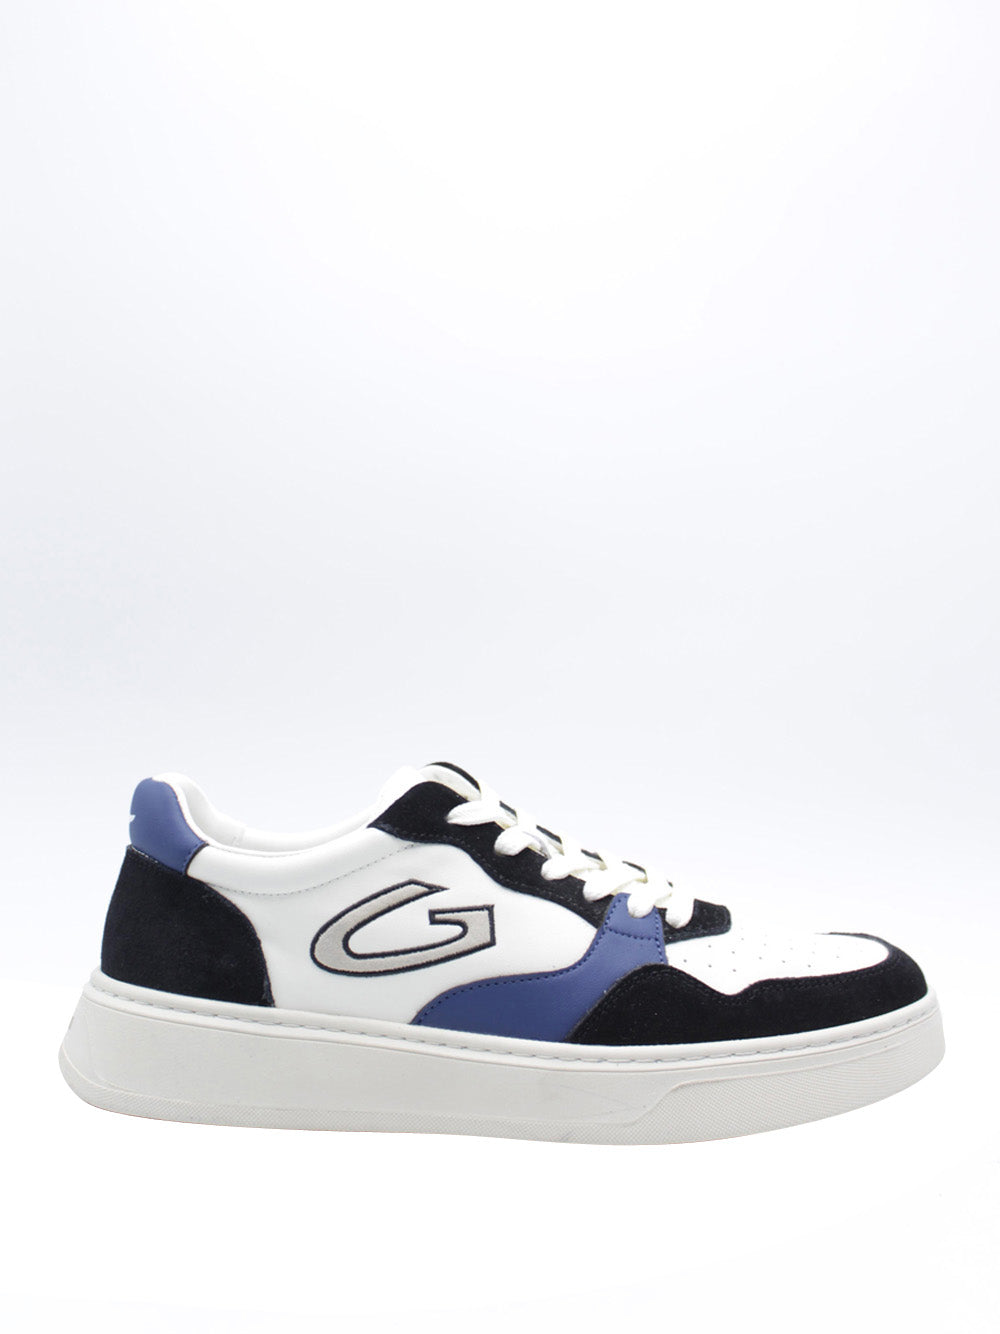 GUARDIANI Sneakers Uomo - Bianco/blu modello AGM316005